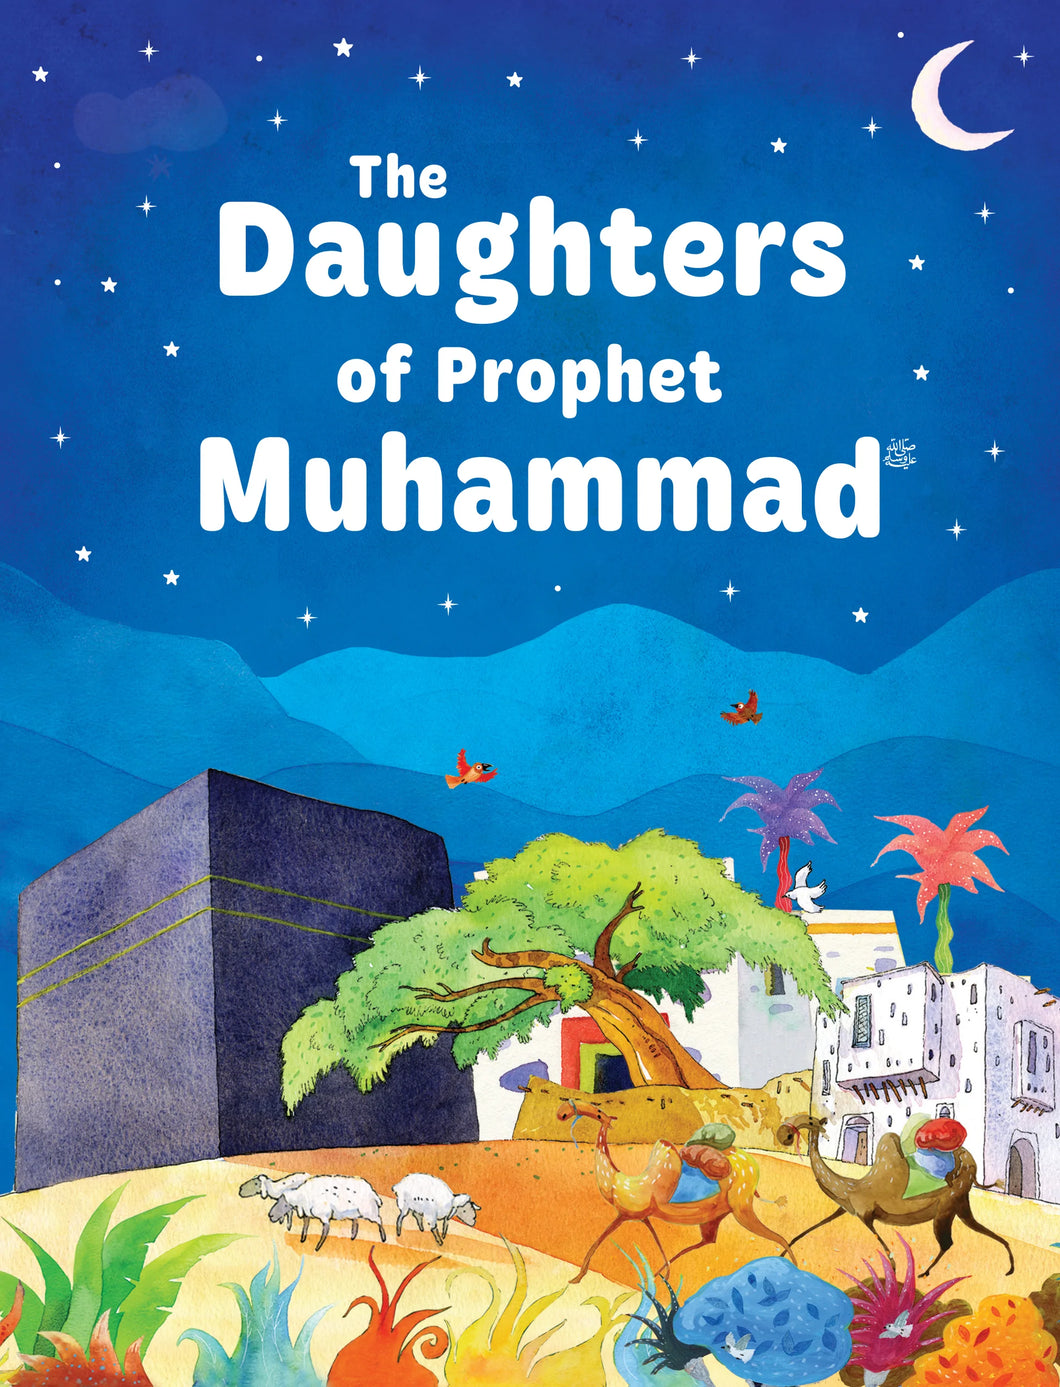 The Daughters of Prophet Muhammad